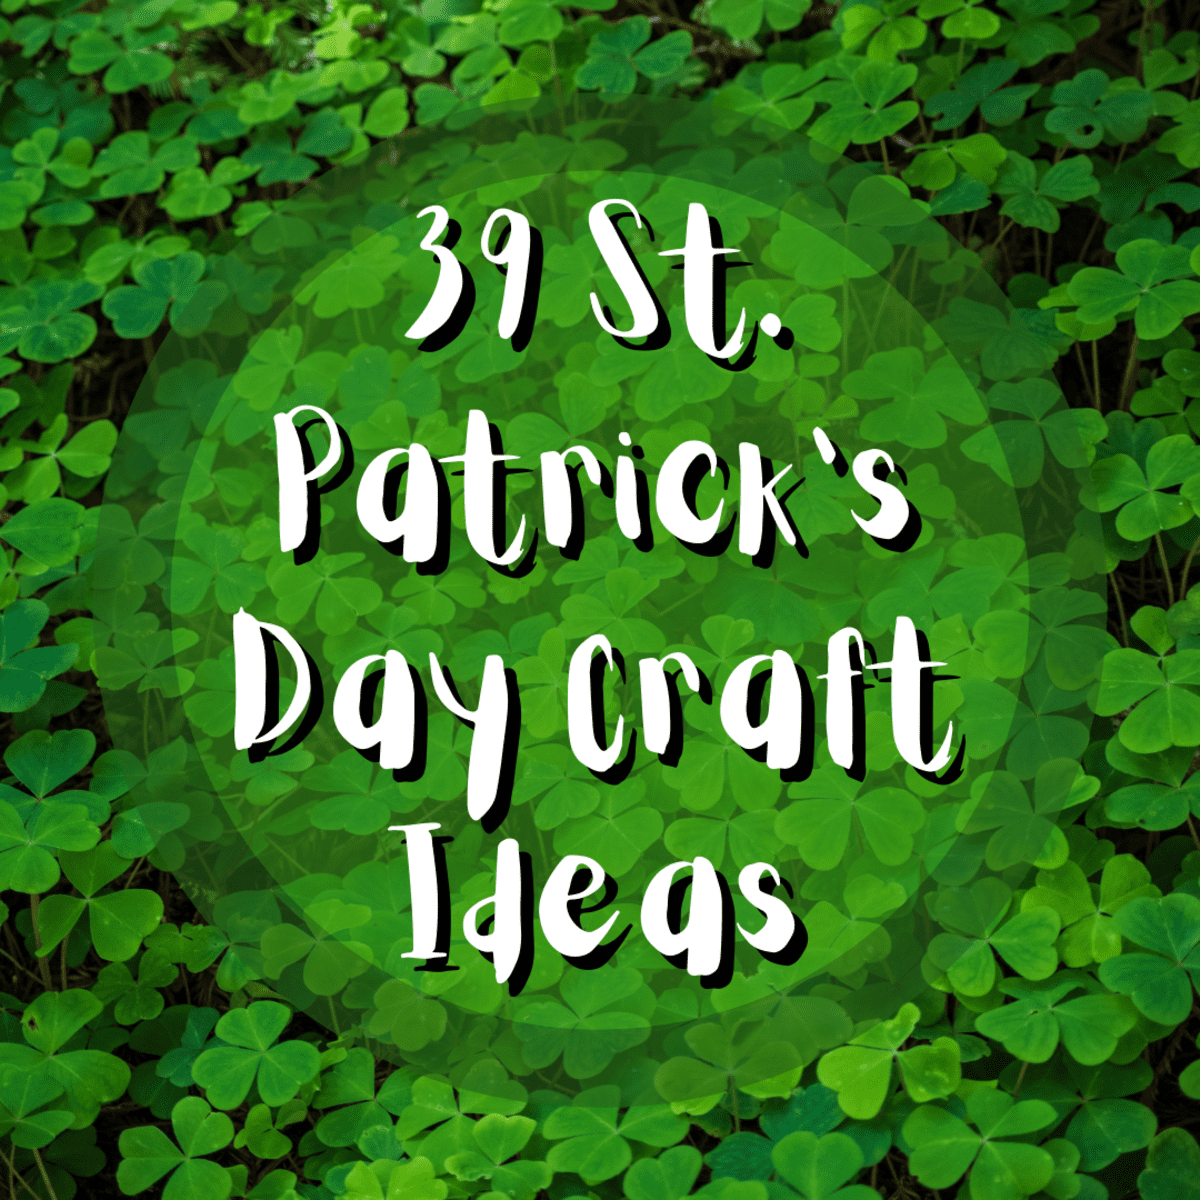 39 Outstanding St. Patrick's Day Craft Ideas - FeltMagnet